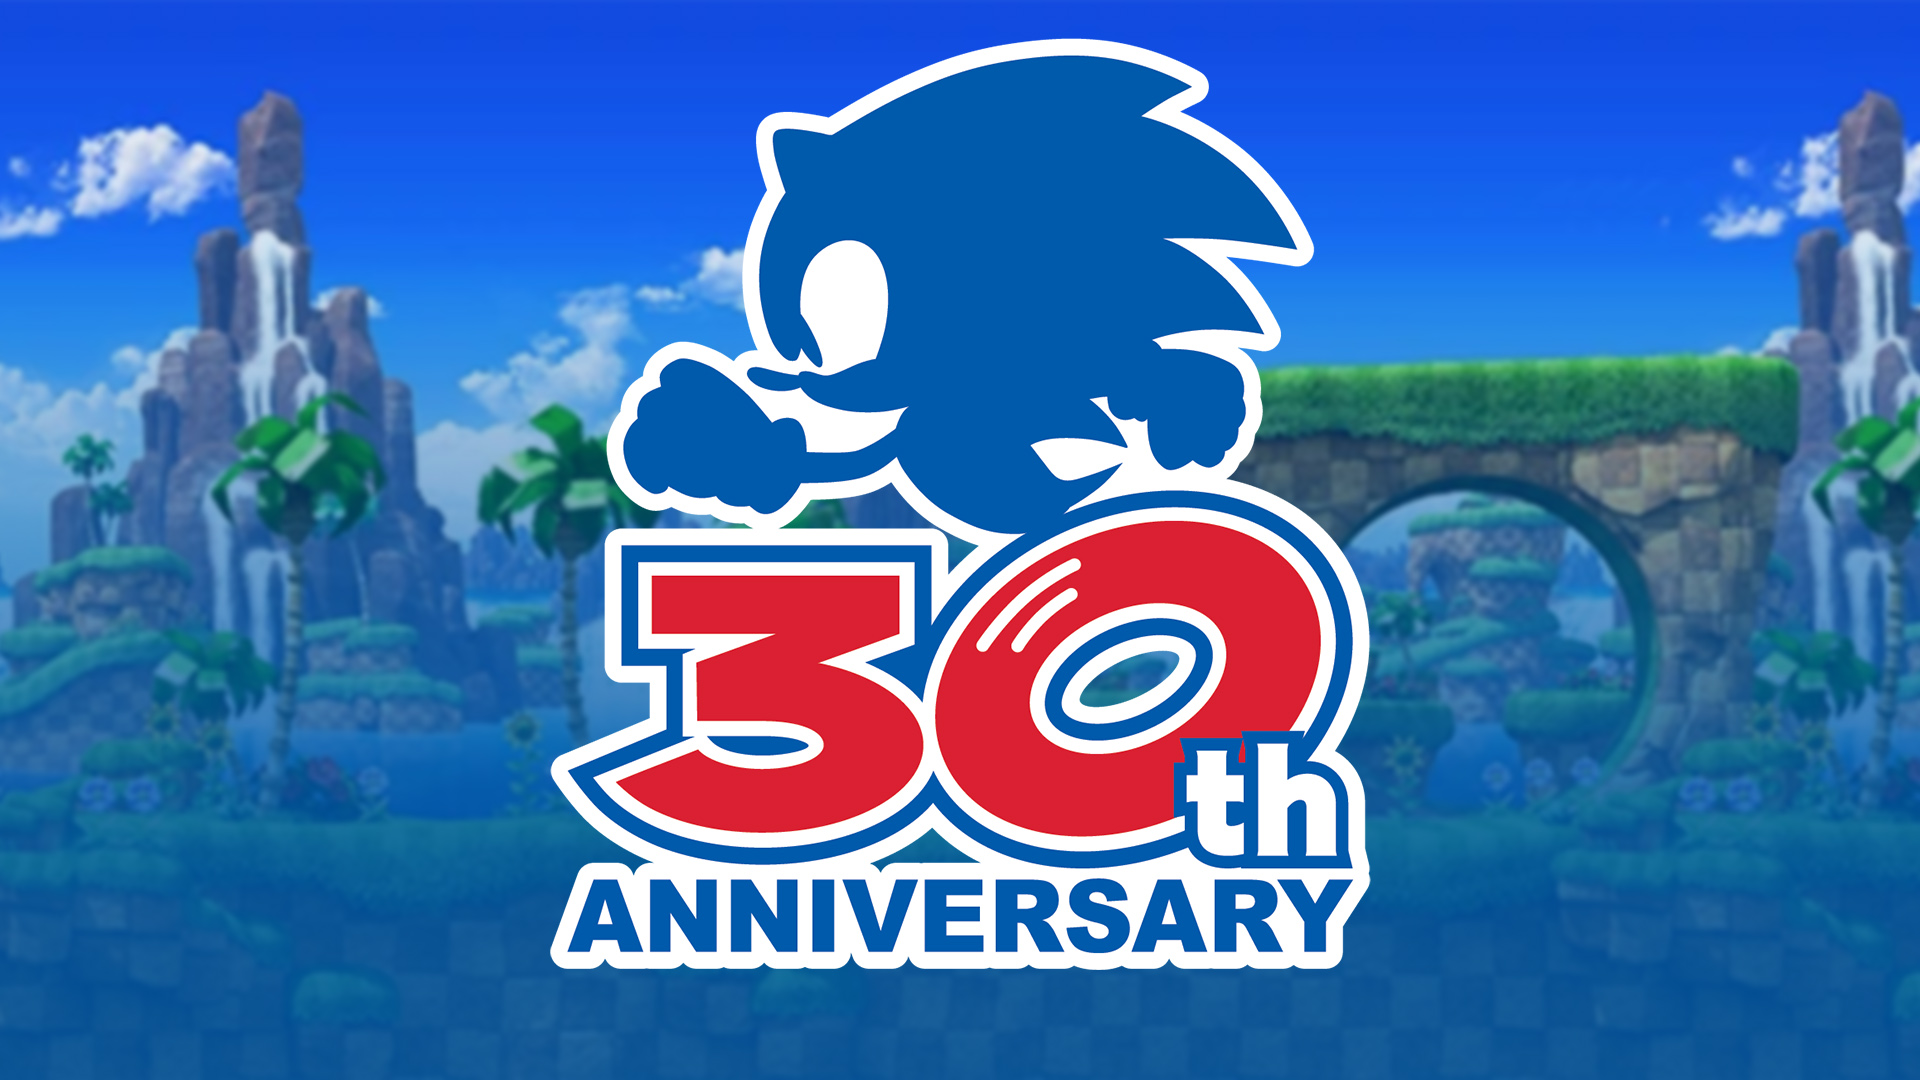 Sonic the Hedgehog's 30th anniversary logo